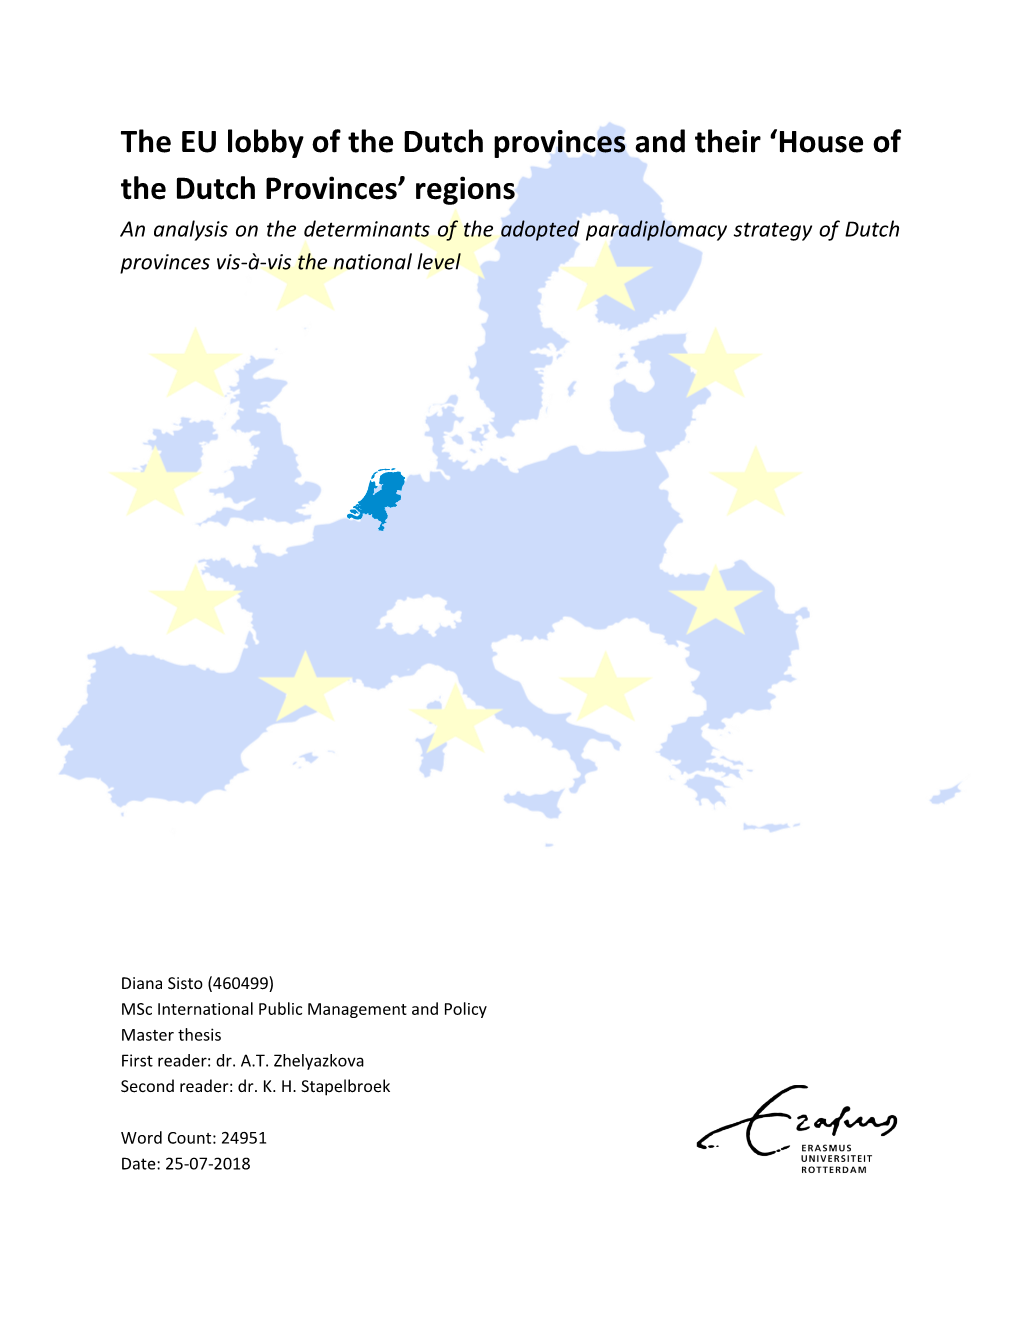 The EU Lobby of the Dutch Provinces and Their